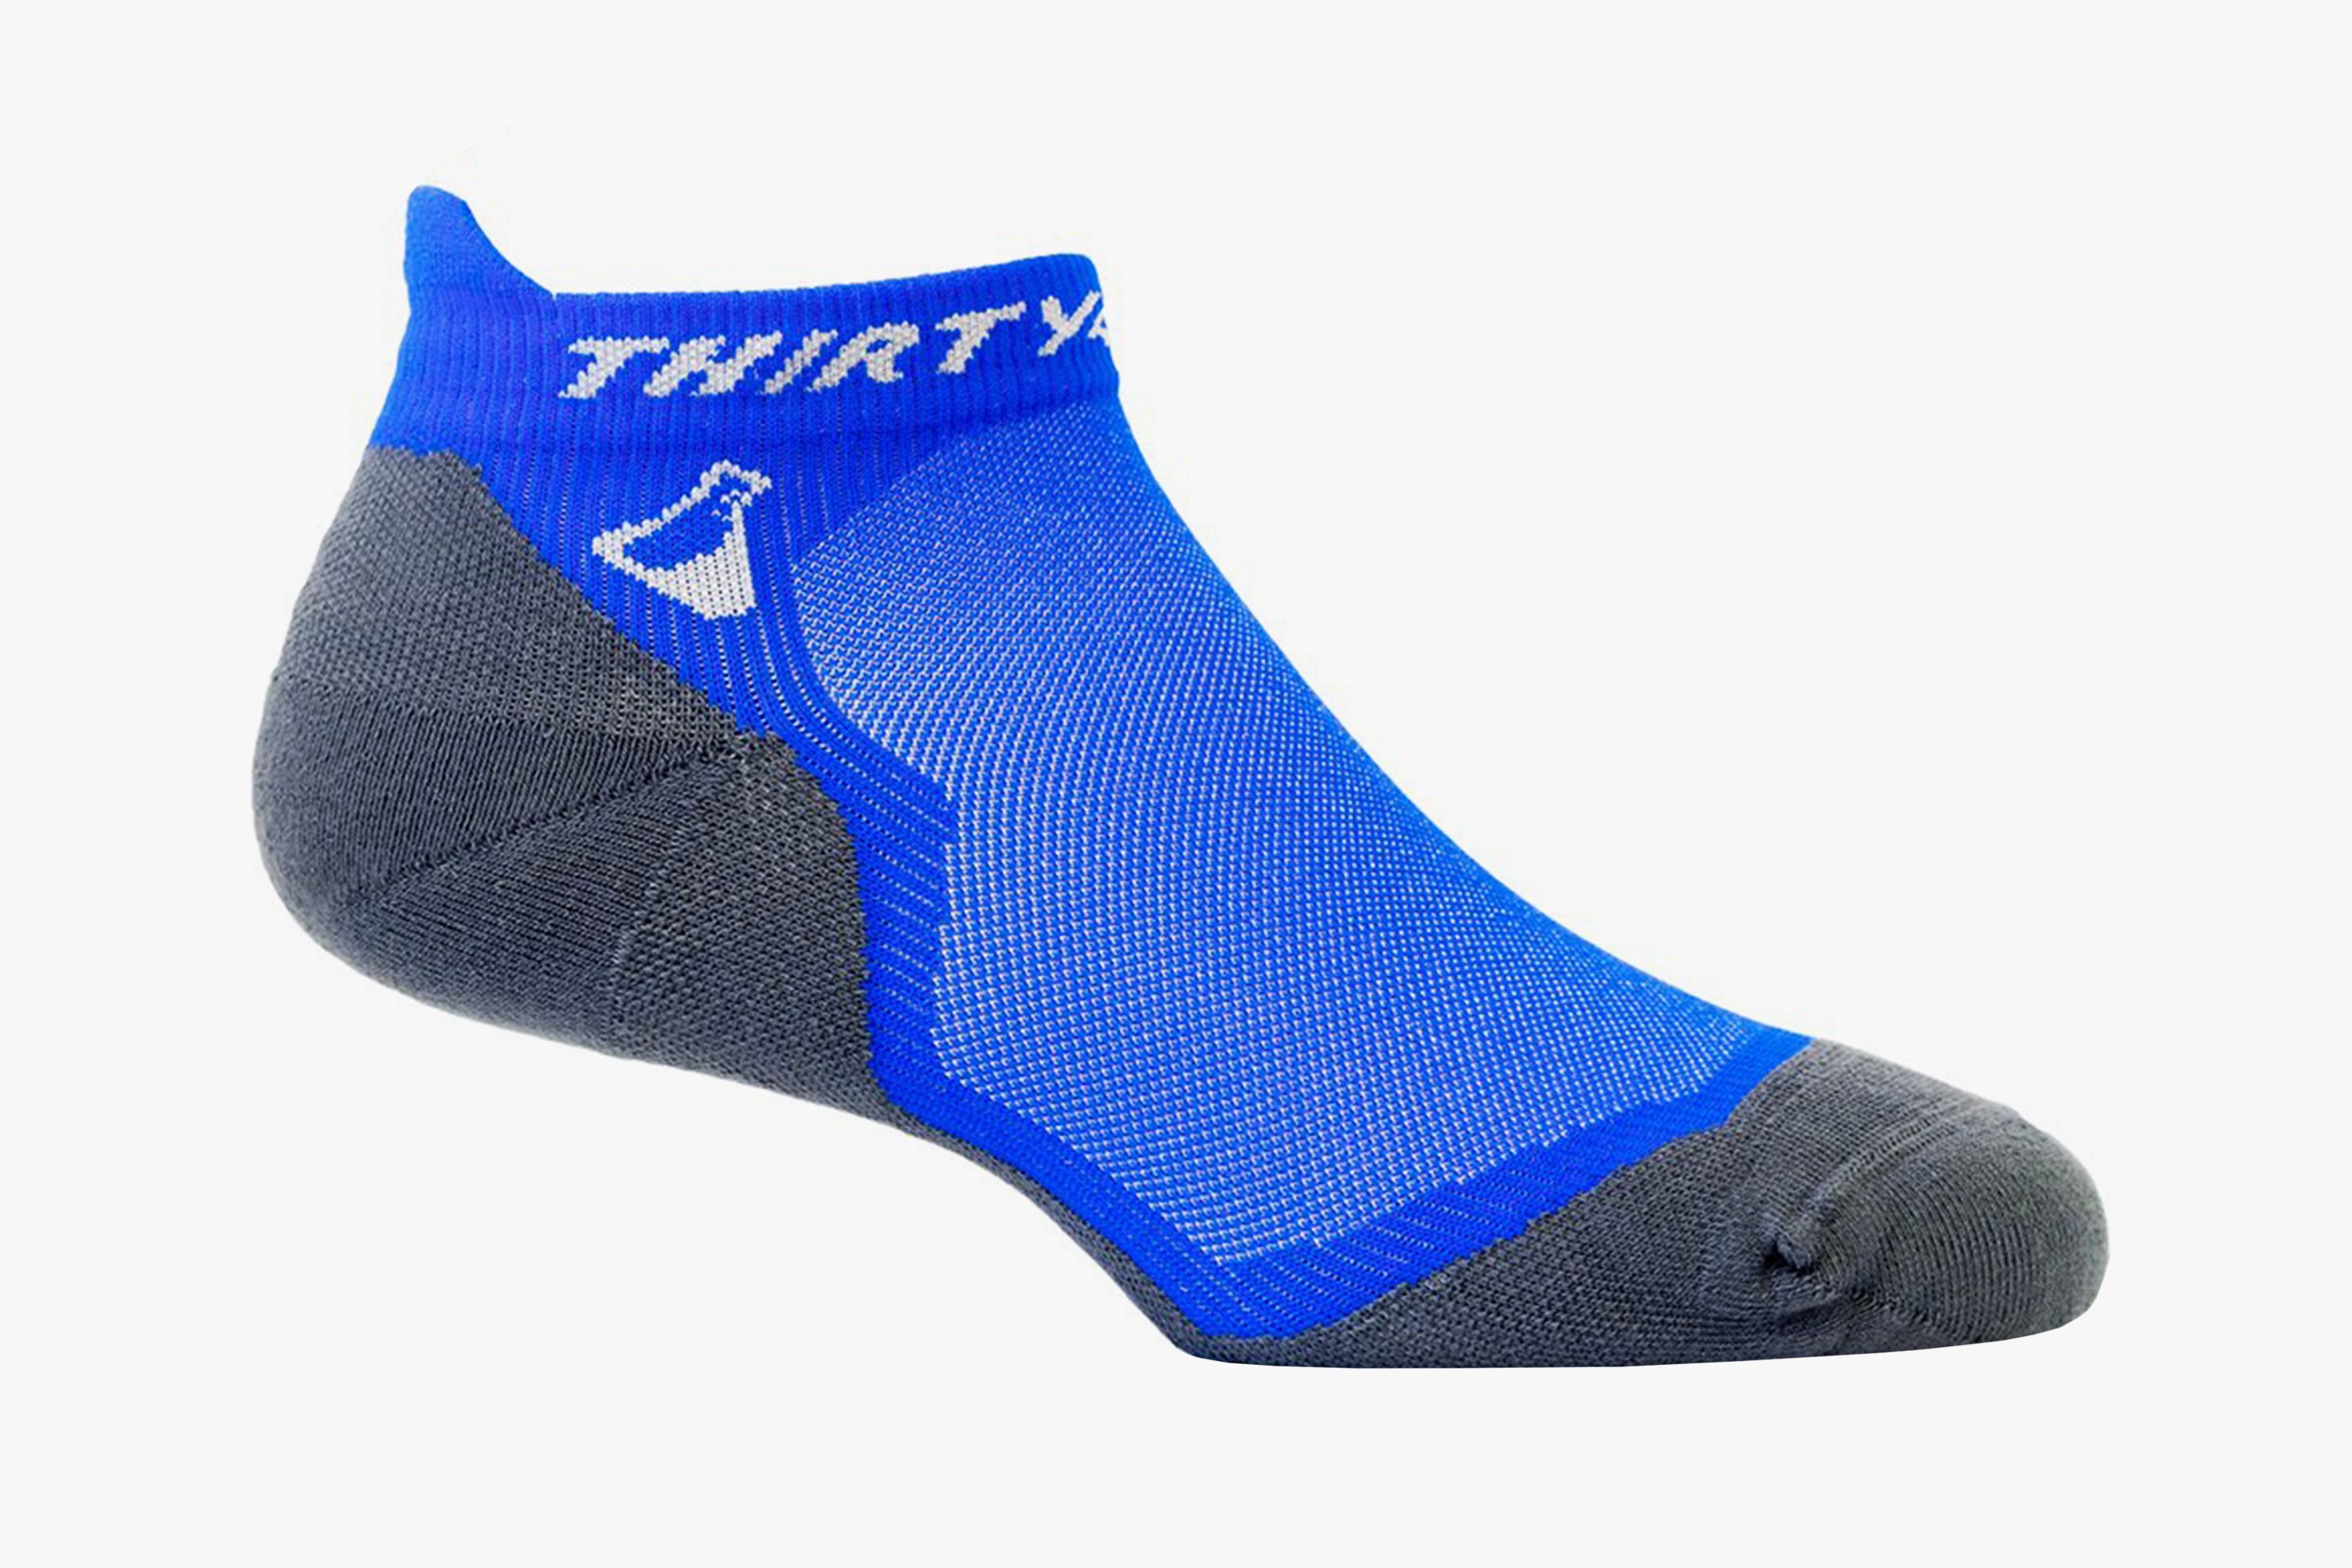 13 Best Running Socks to Buy in 2020 